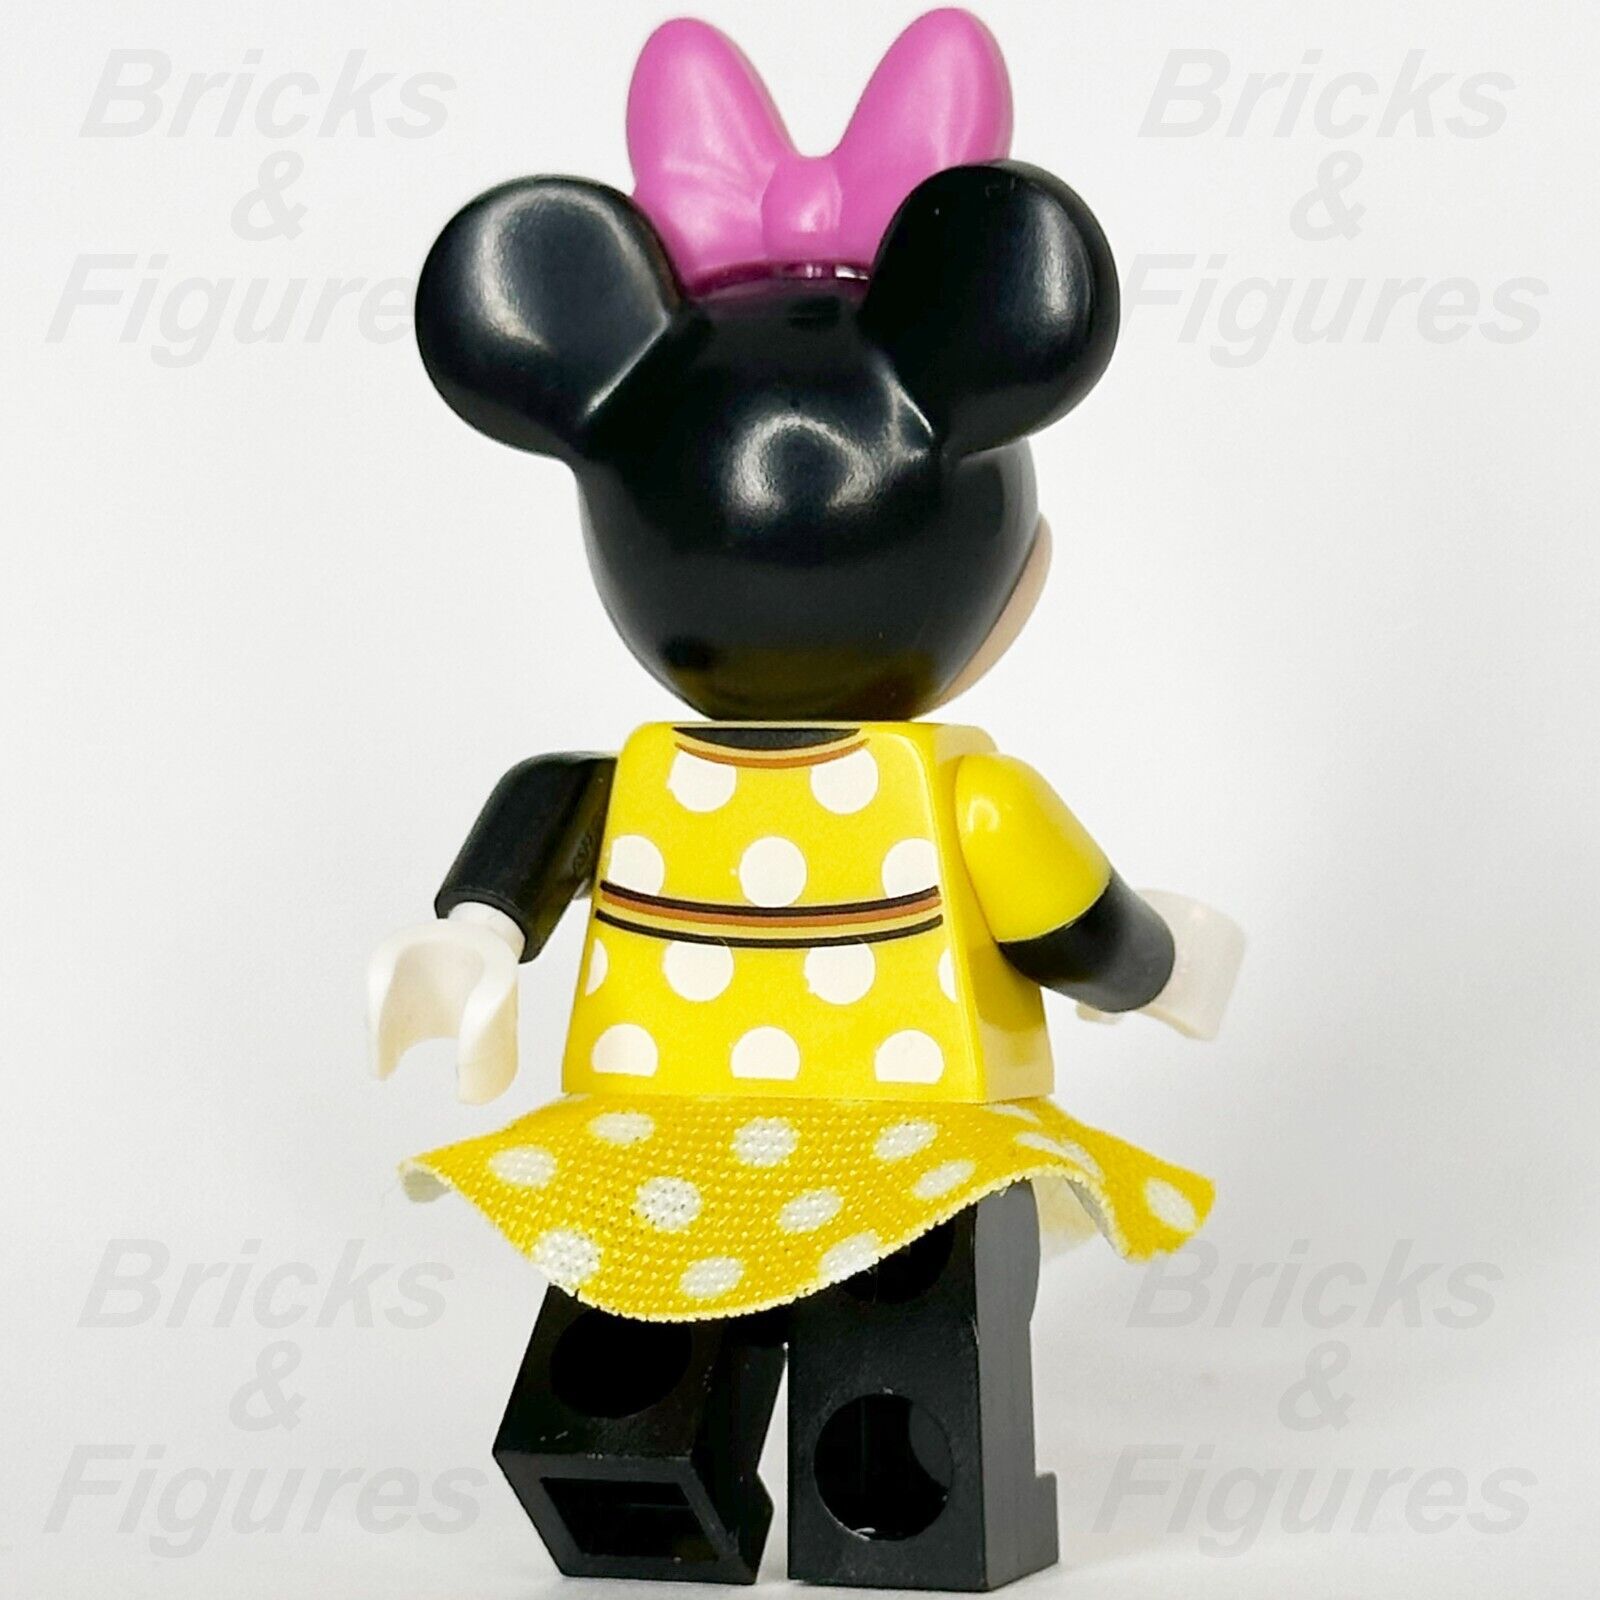 LEGO Disney Minnie Mouse Minifigure Mickey and Friends Yellow Dress 10773 dis056 - Bricks & Figures